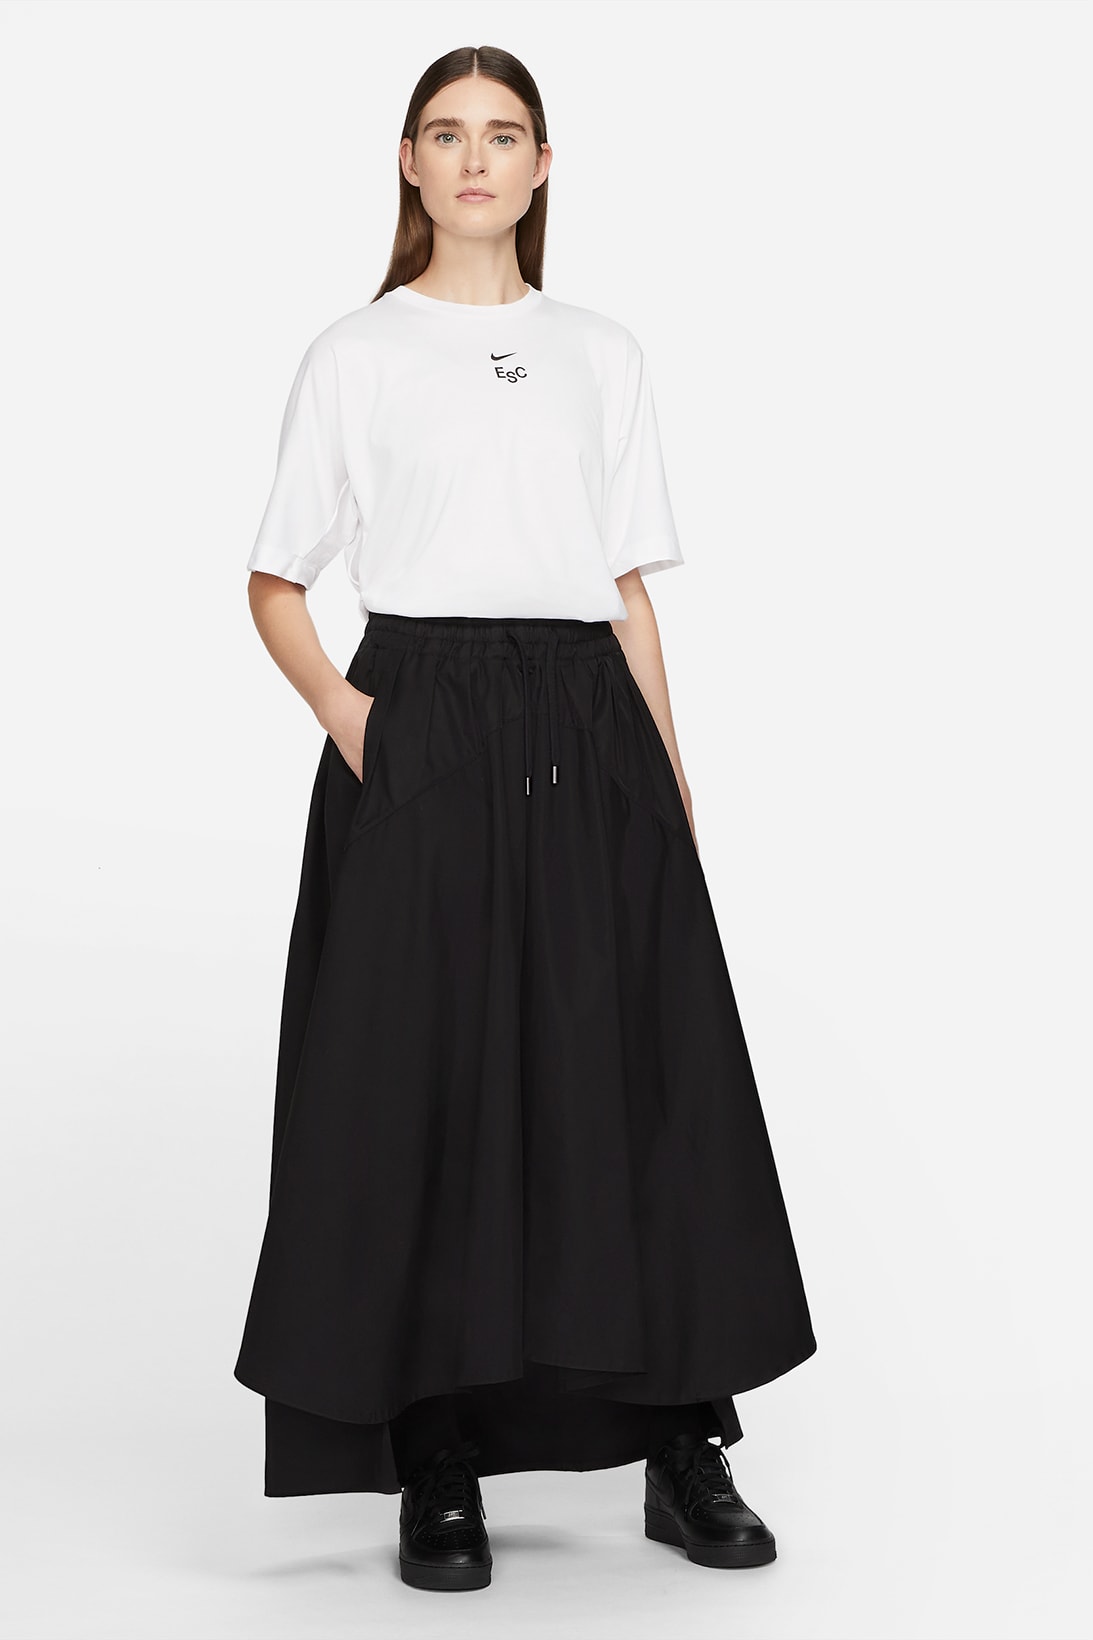 nike design exploration apparel collection tee t shirt skirt